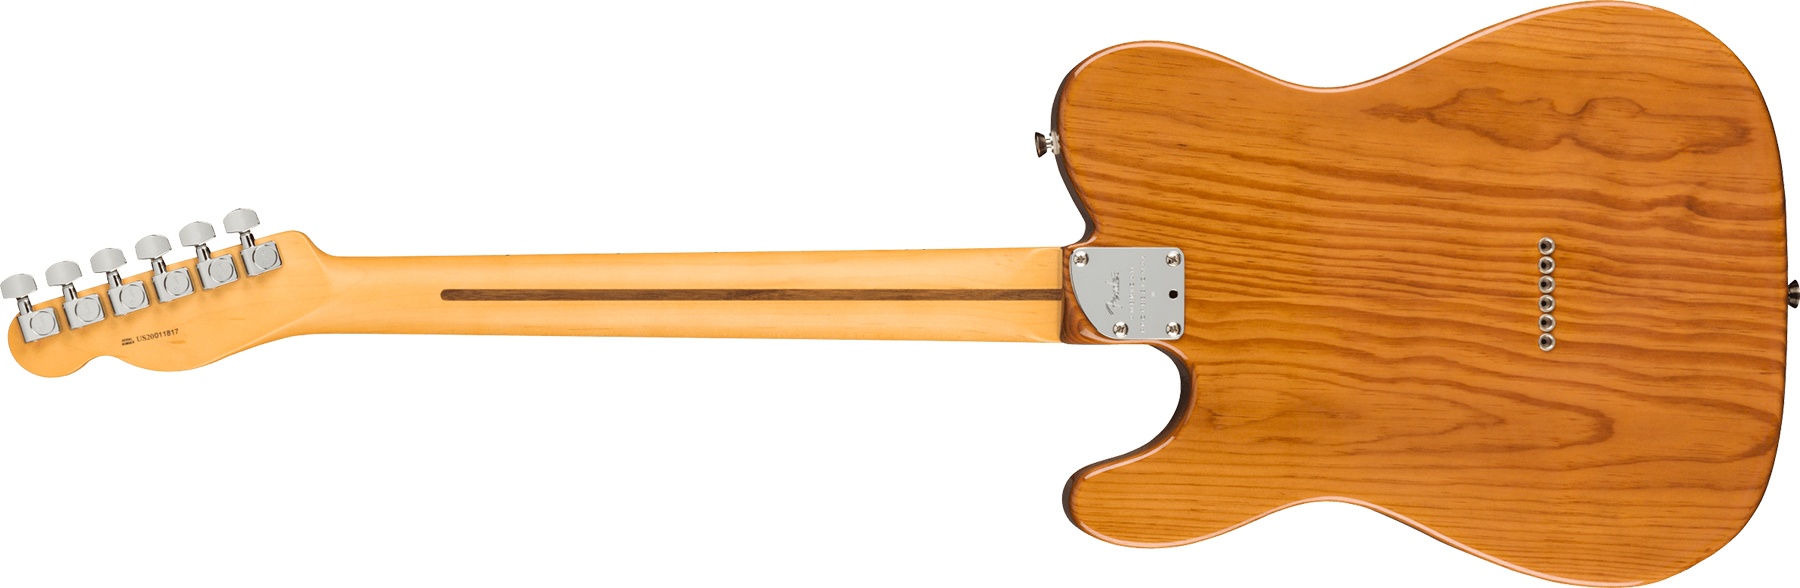 Fender Tele American Professional Ii Usa Mn - Roasted Pine - Tel shape electric guitar - Variation 1